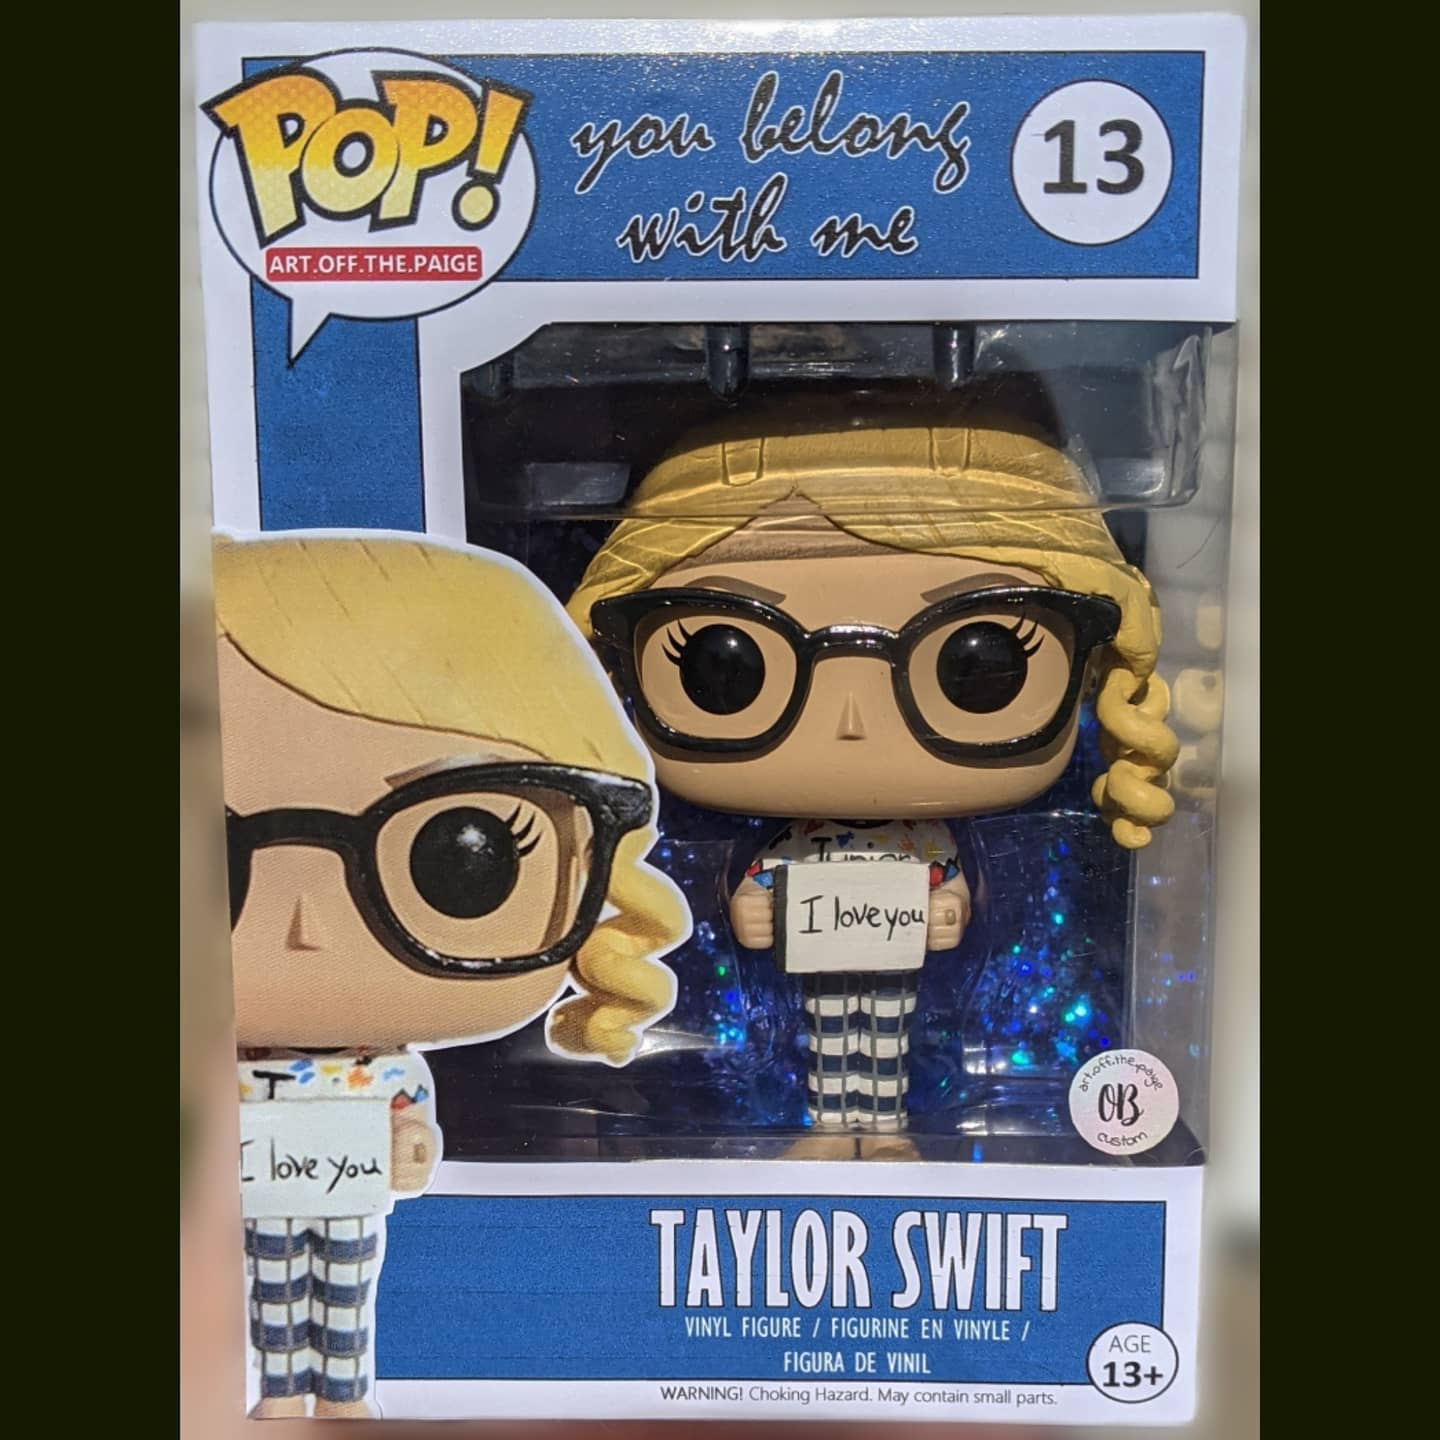 CUSTOM Taylor Swift Midnights Funko Pop made by ME 💙 #taylorswift #mi, pop  taylor swift